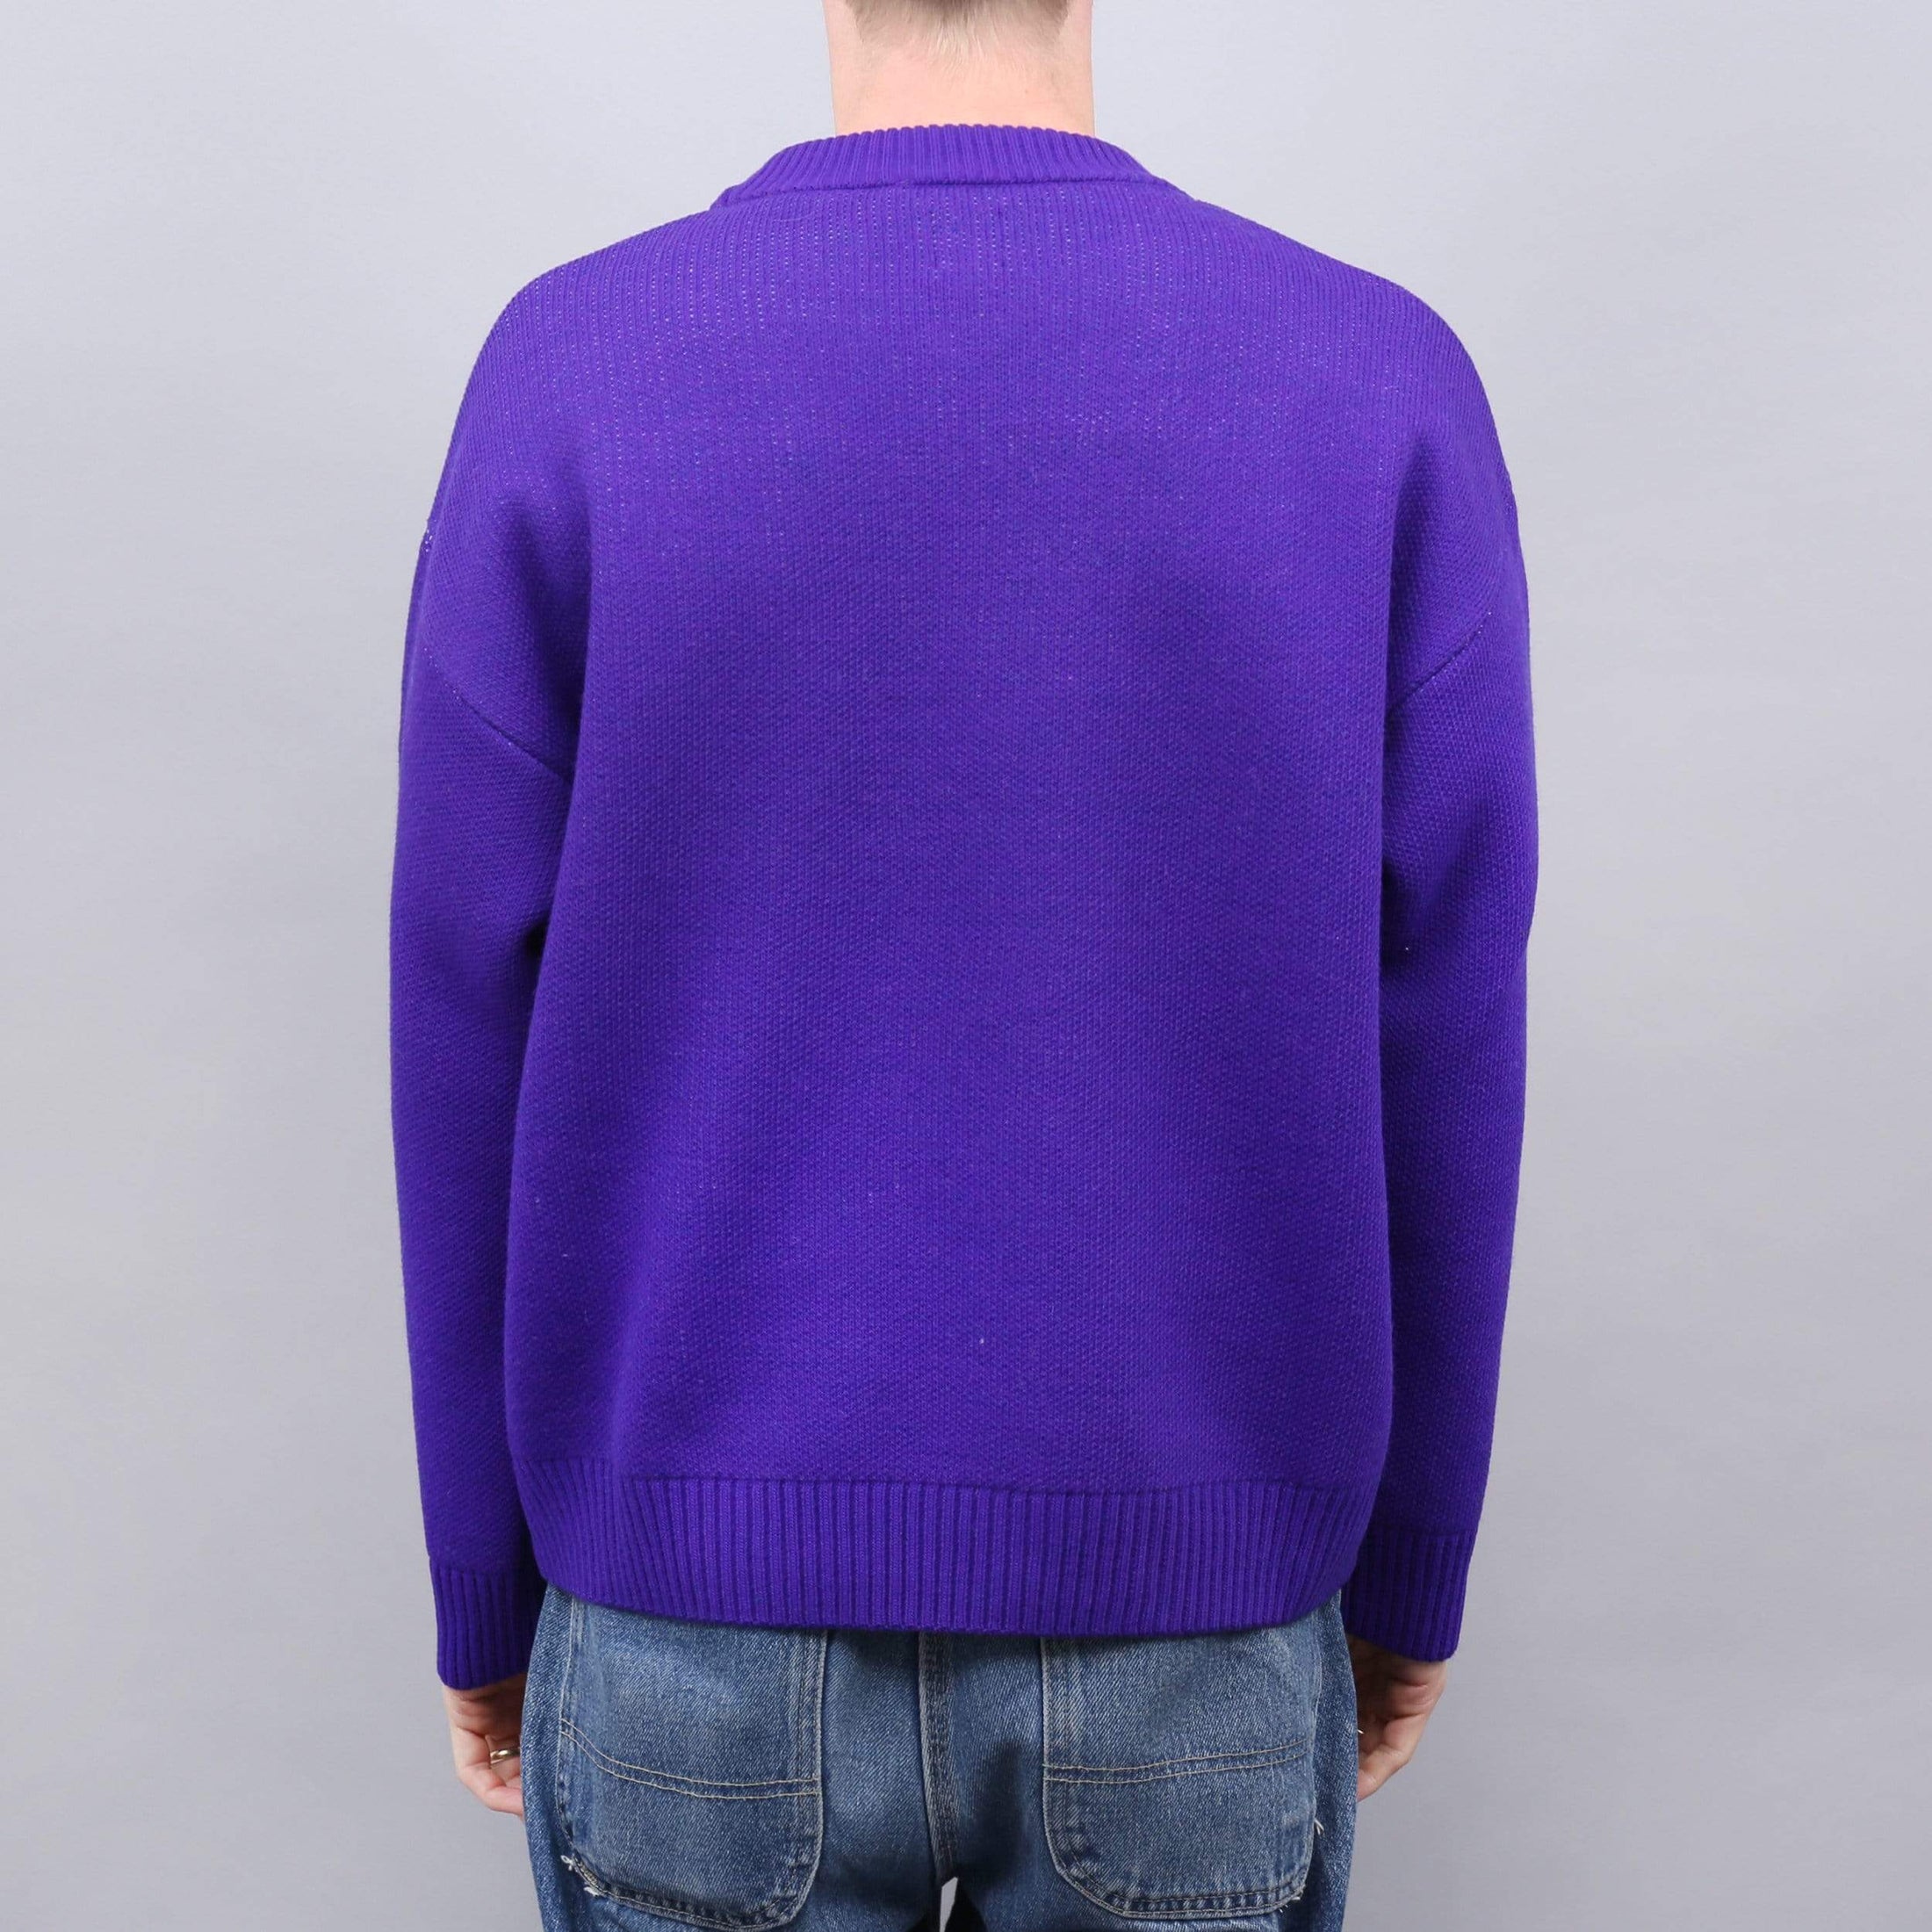 Polar Skate Dude Knit Sweater Purple